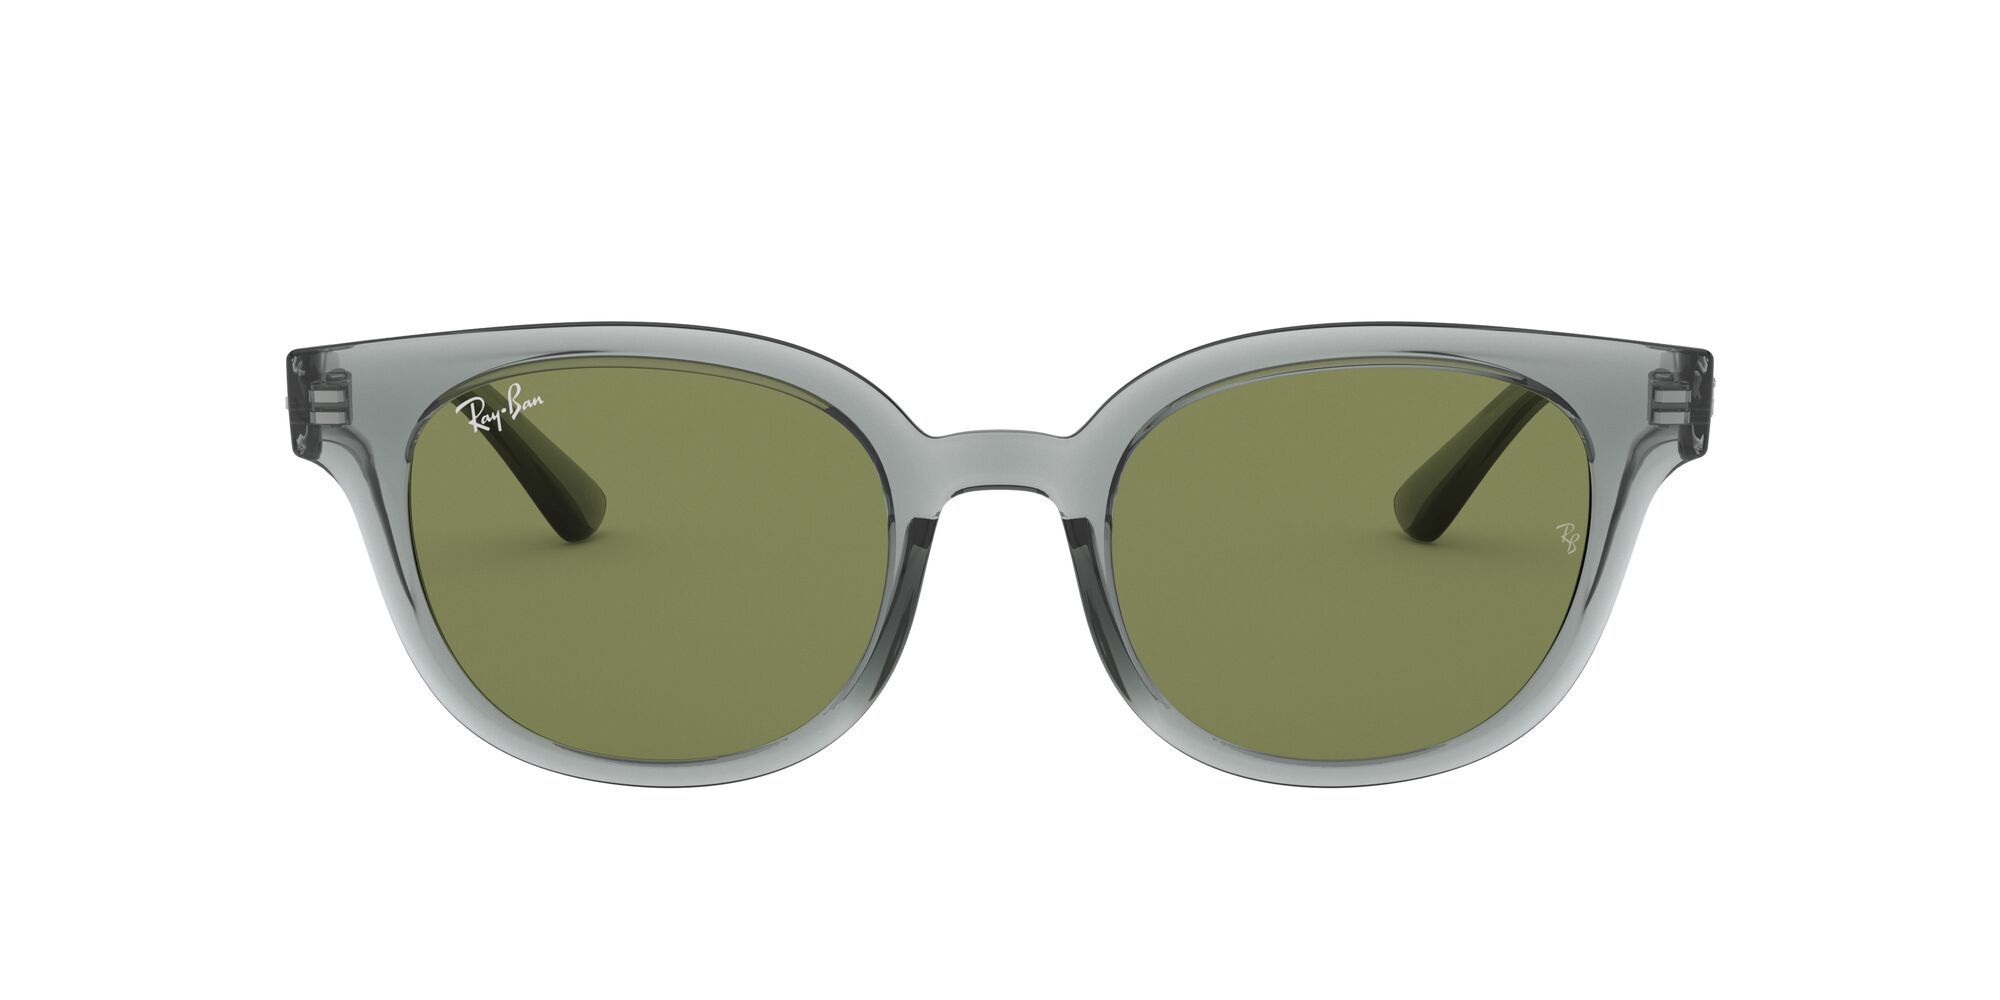 Ray-Ban 0RB4324 Light Green Highstreet Square Sunglasses (50 mm)